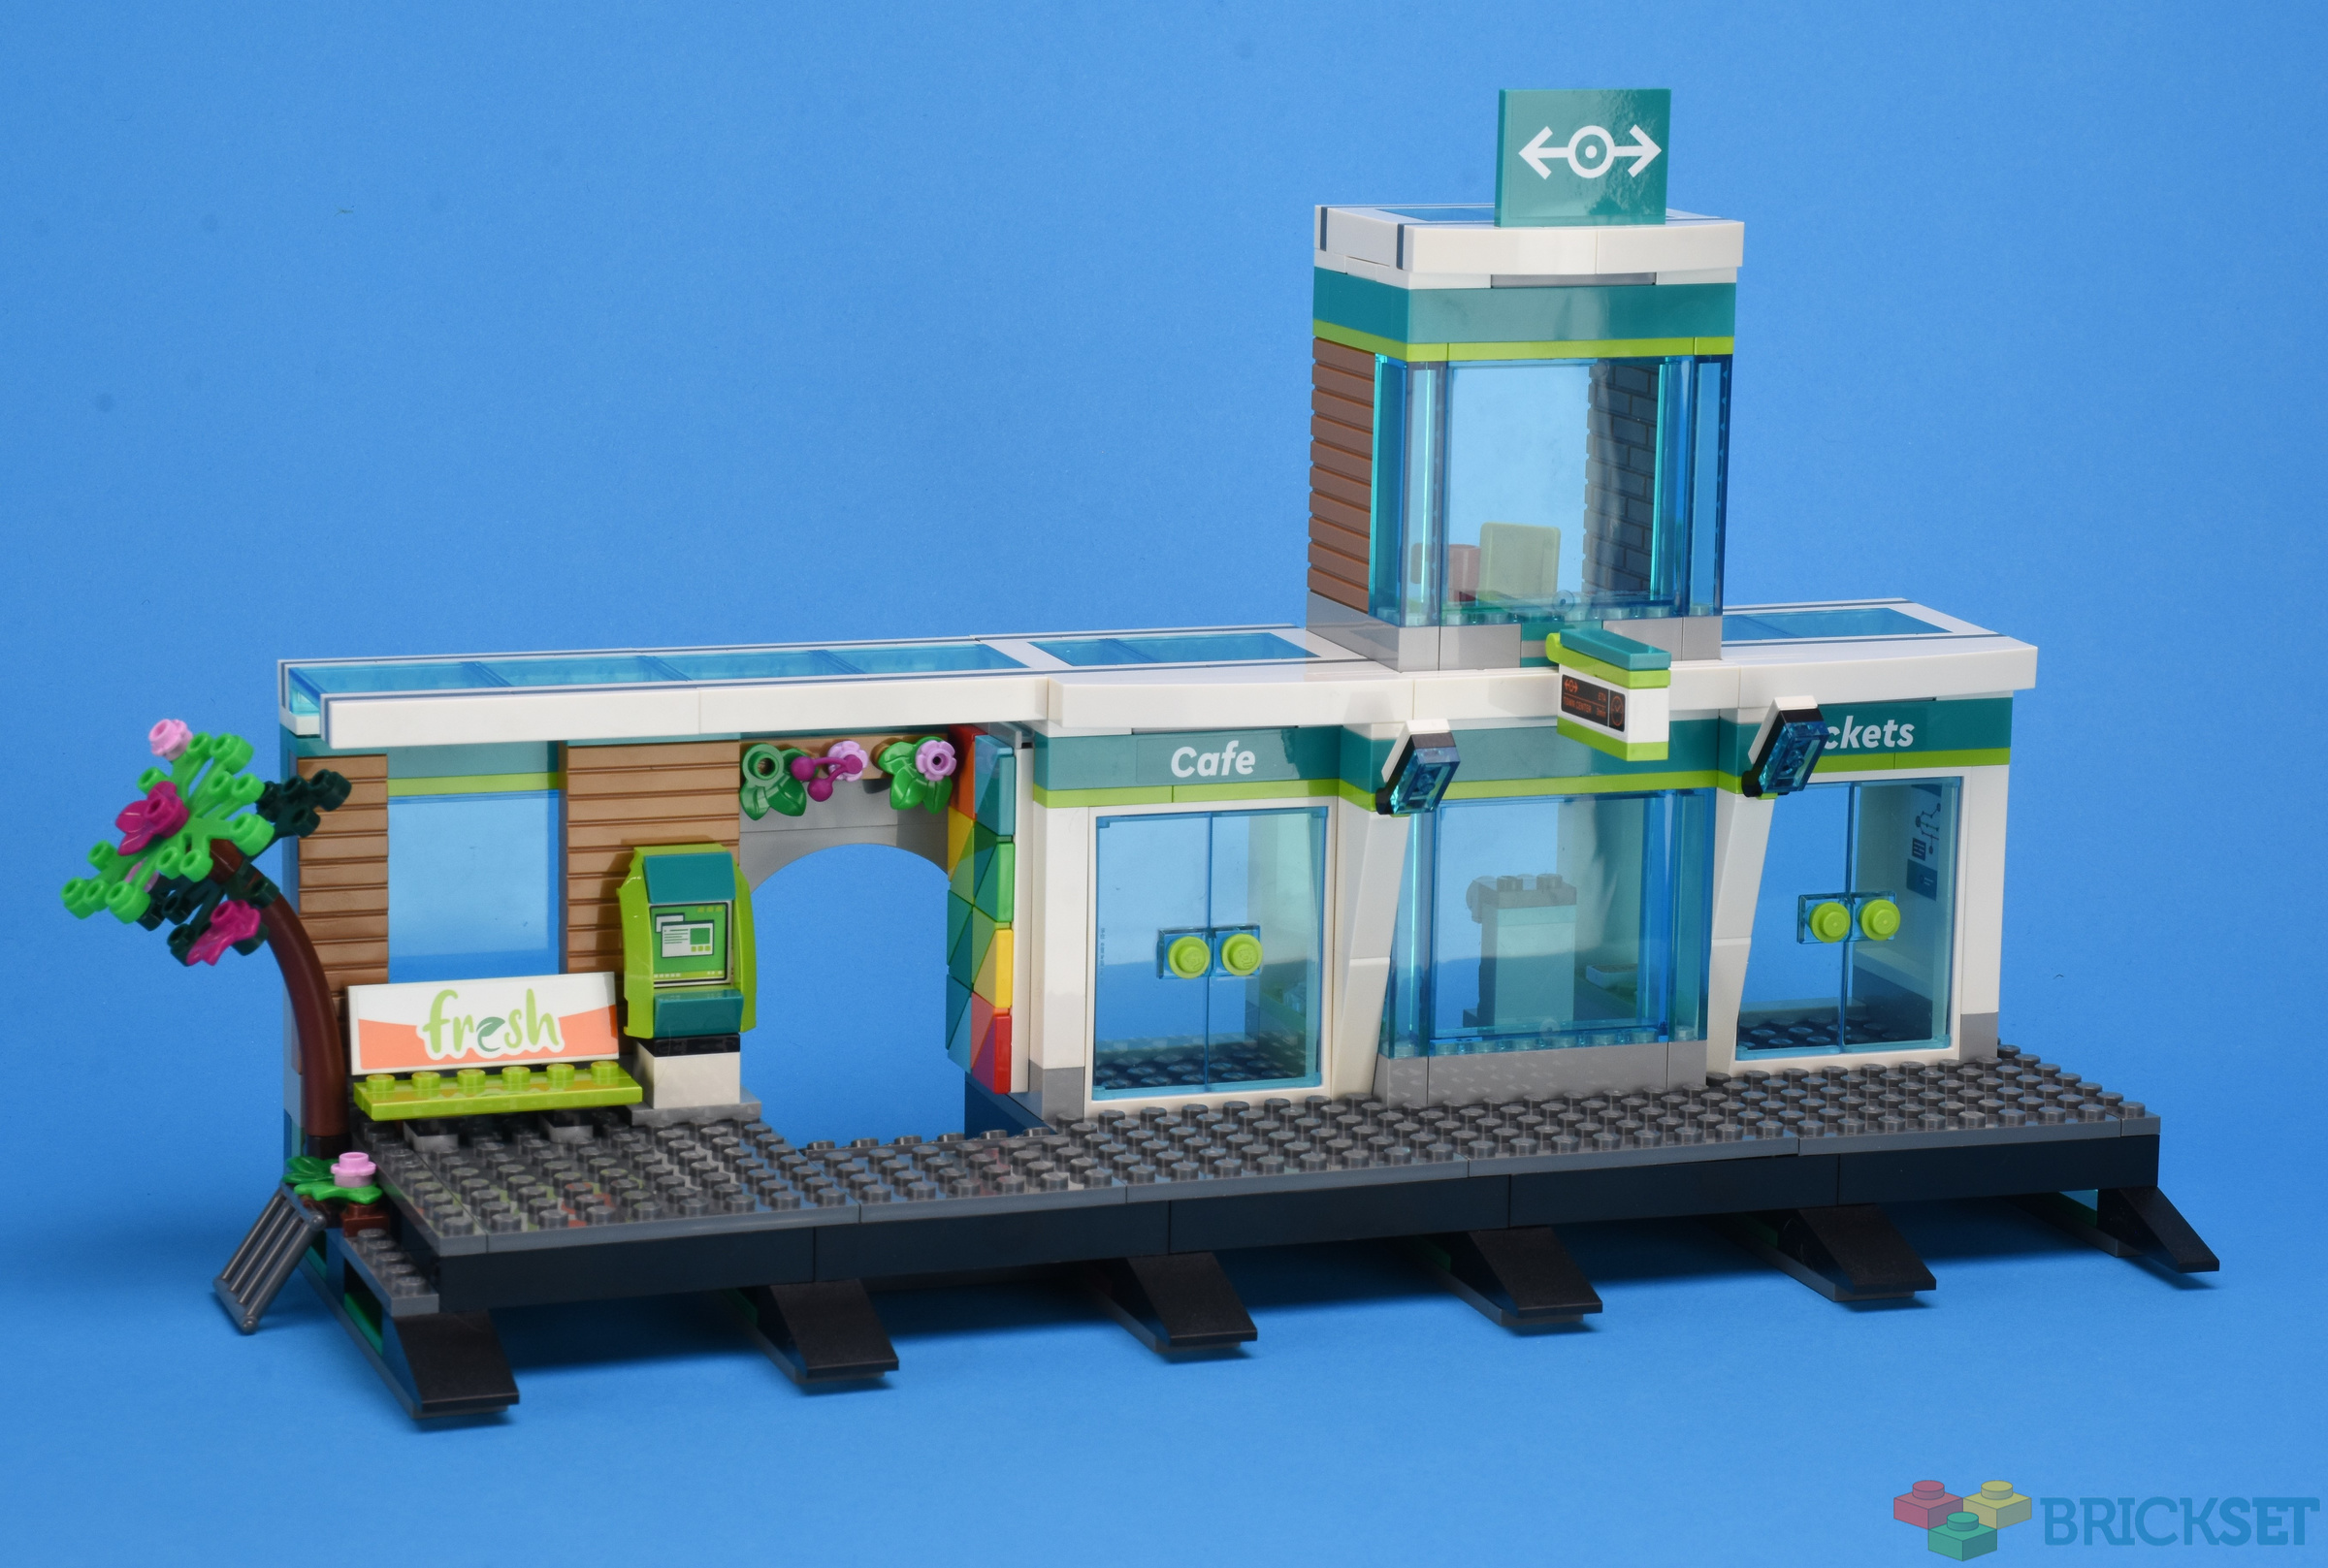 LEGO City Train Station Review (60335) - GJBricks LEGO Blog